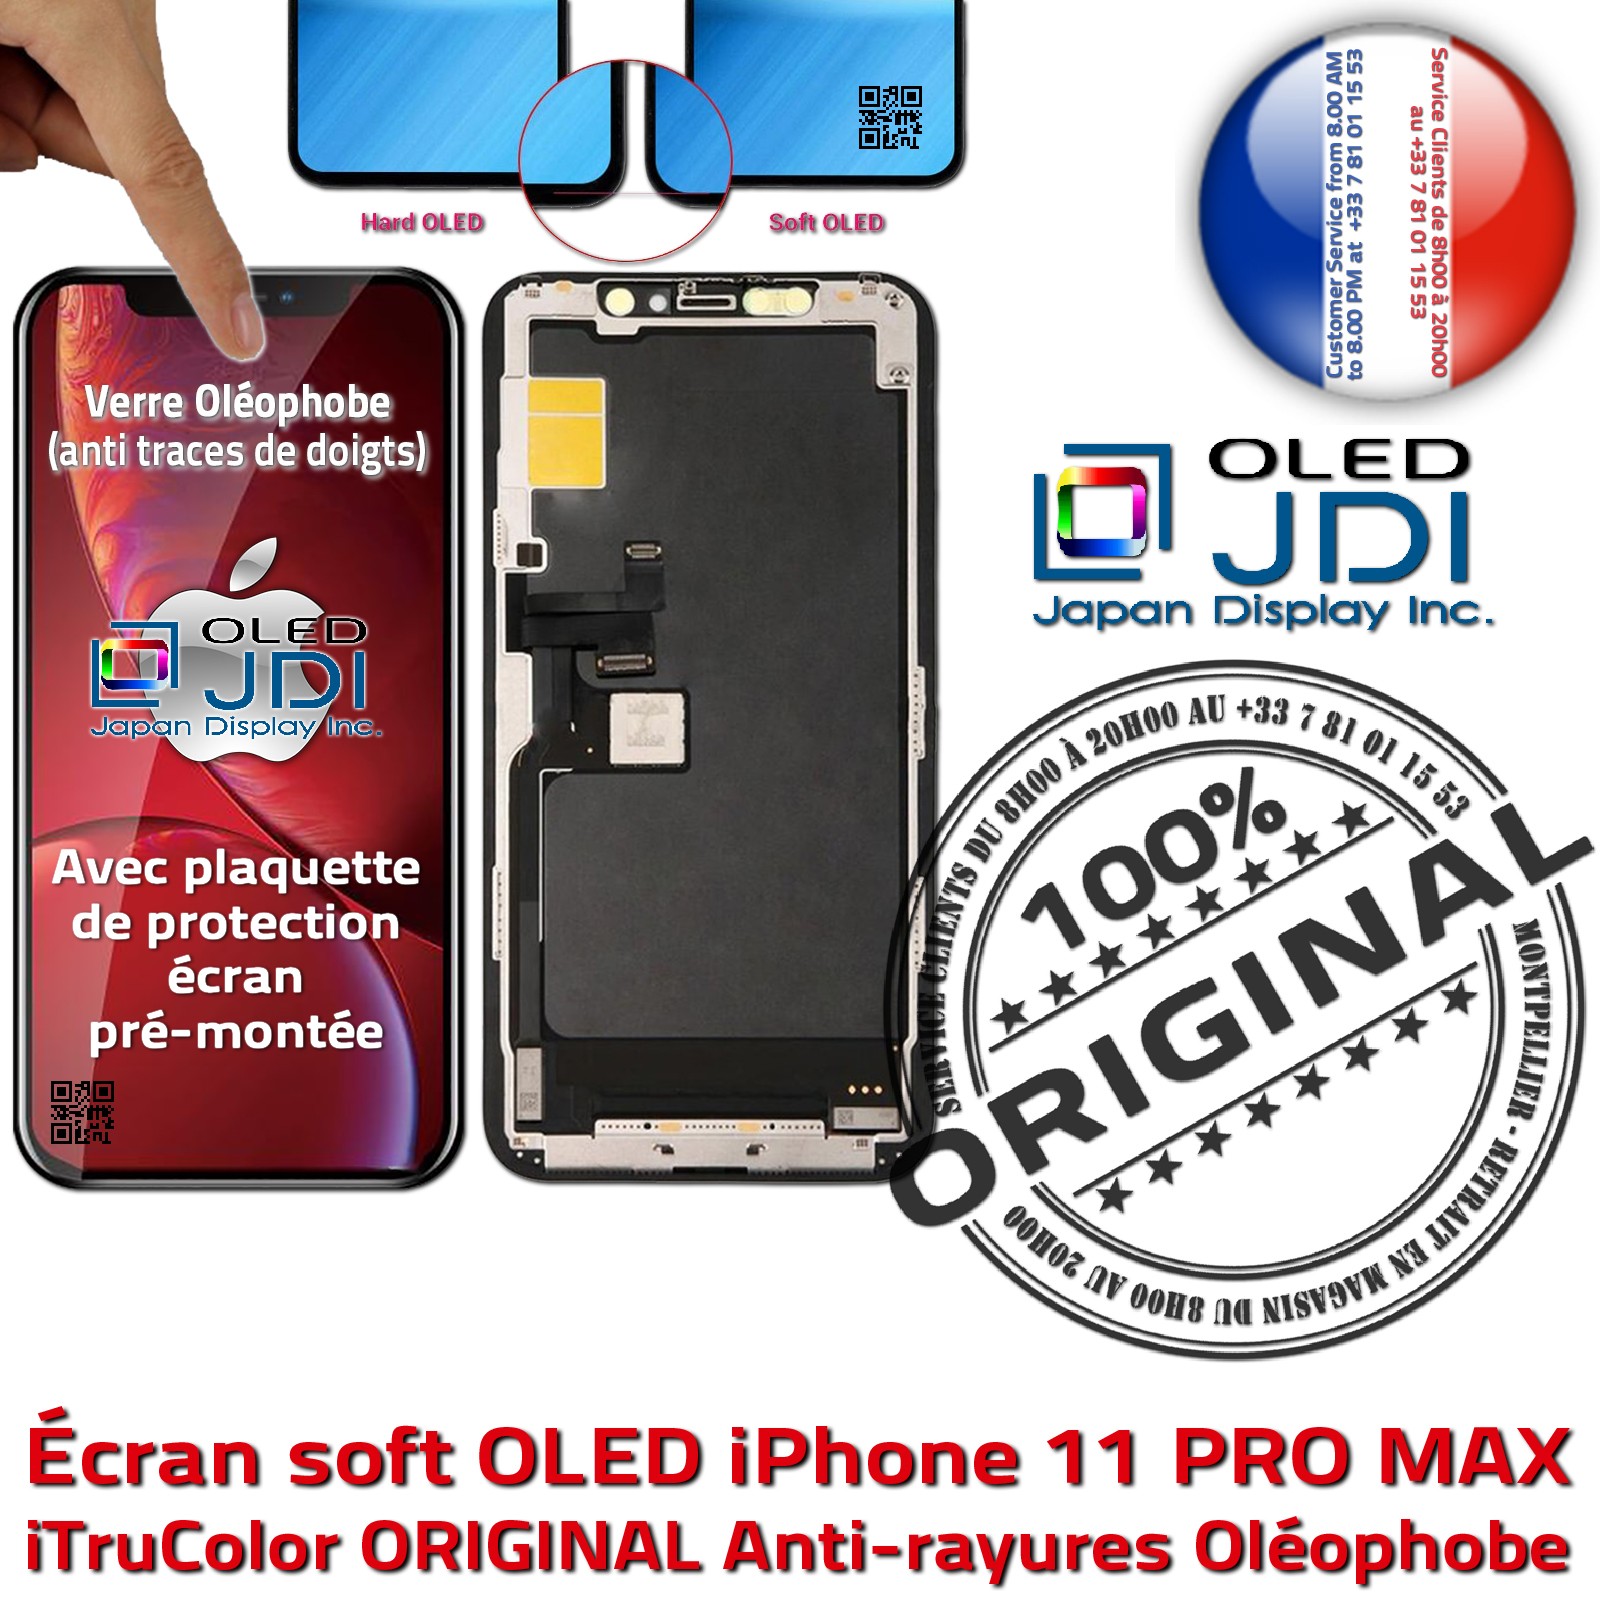 Verre Tactile iPhone 11 PRO MAX soft OLED iTruColor ORIGINAL Écran Verre Multi-Touch SmartPhone Affichage True Tone LG HDR